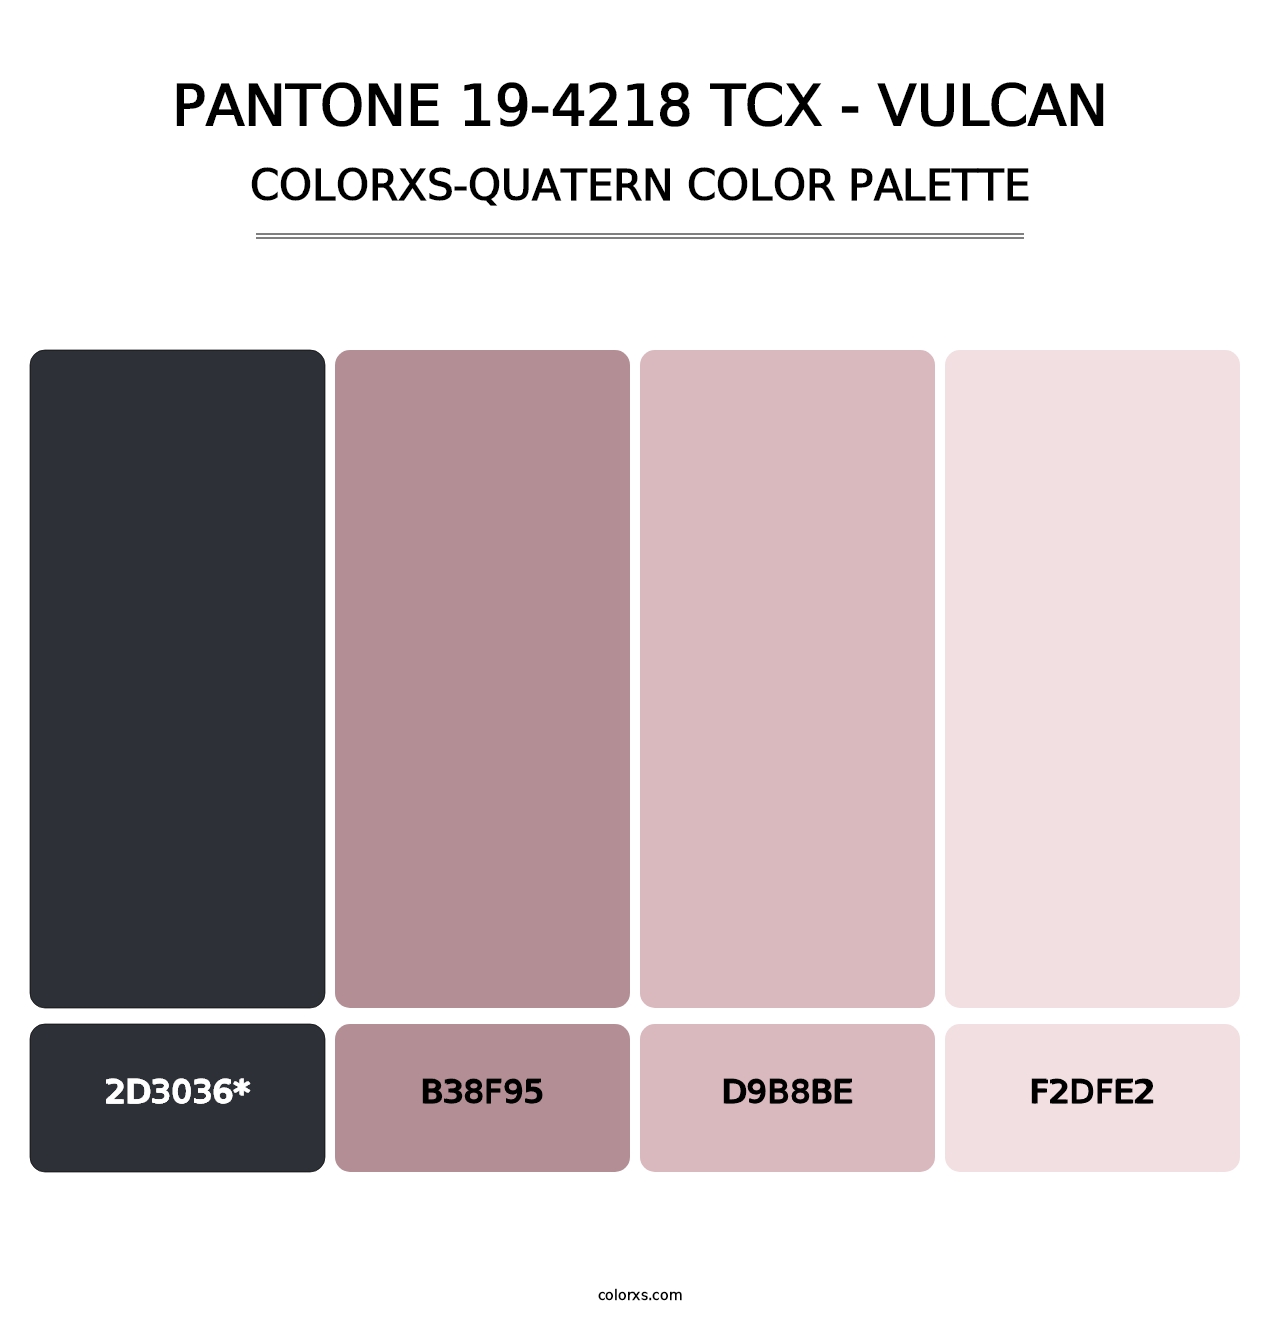 PANTONE 19-4218 TCX - Vulcan - Colorxs Quatern Palette